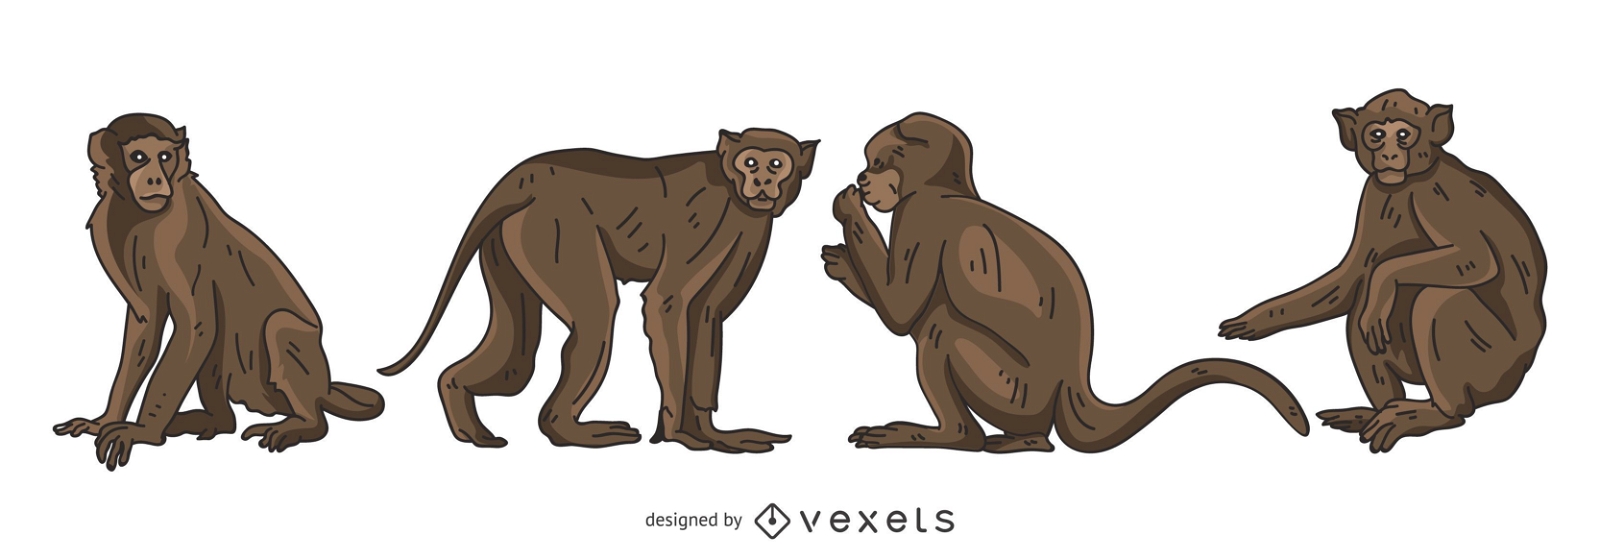 monkey vector illustration free download